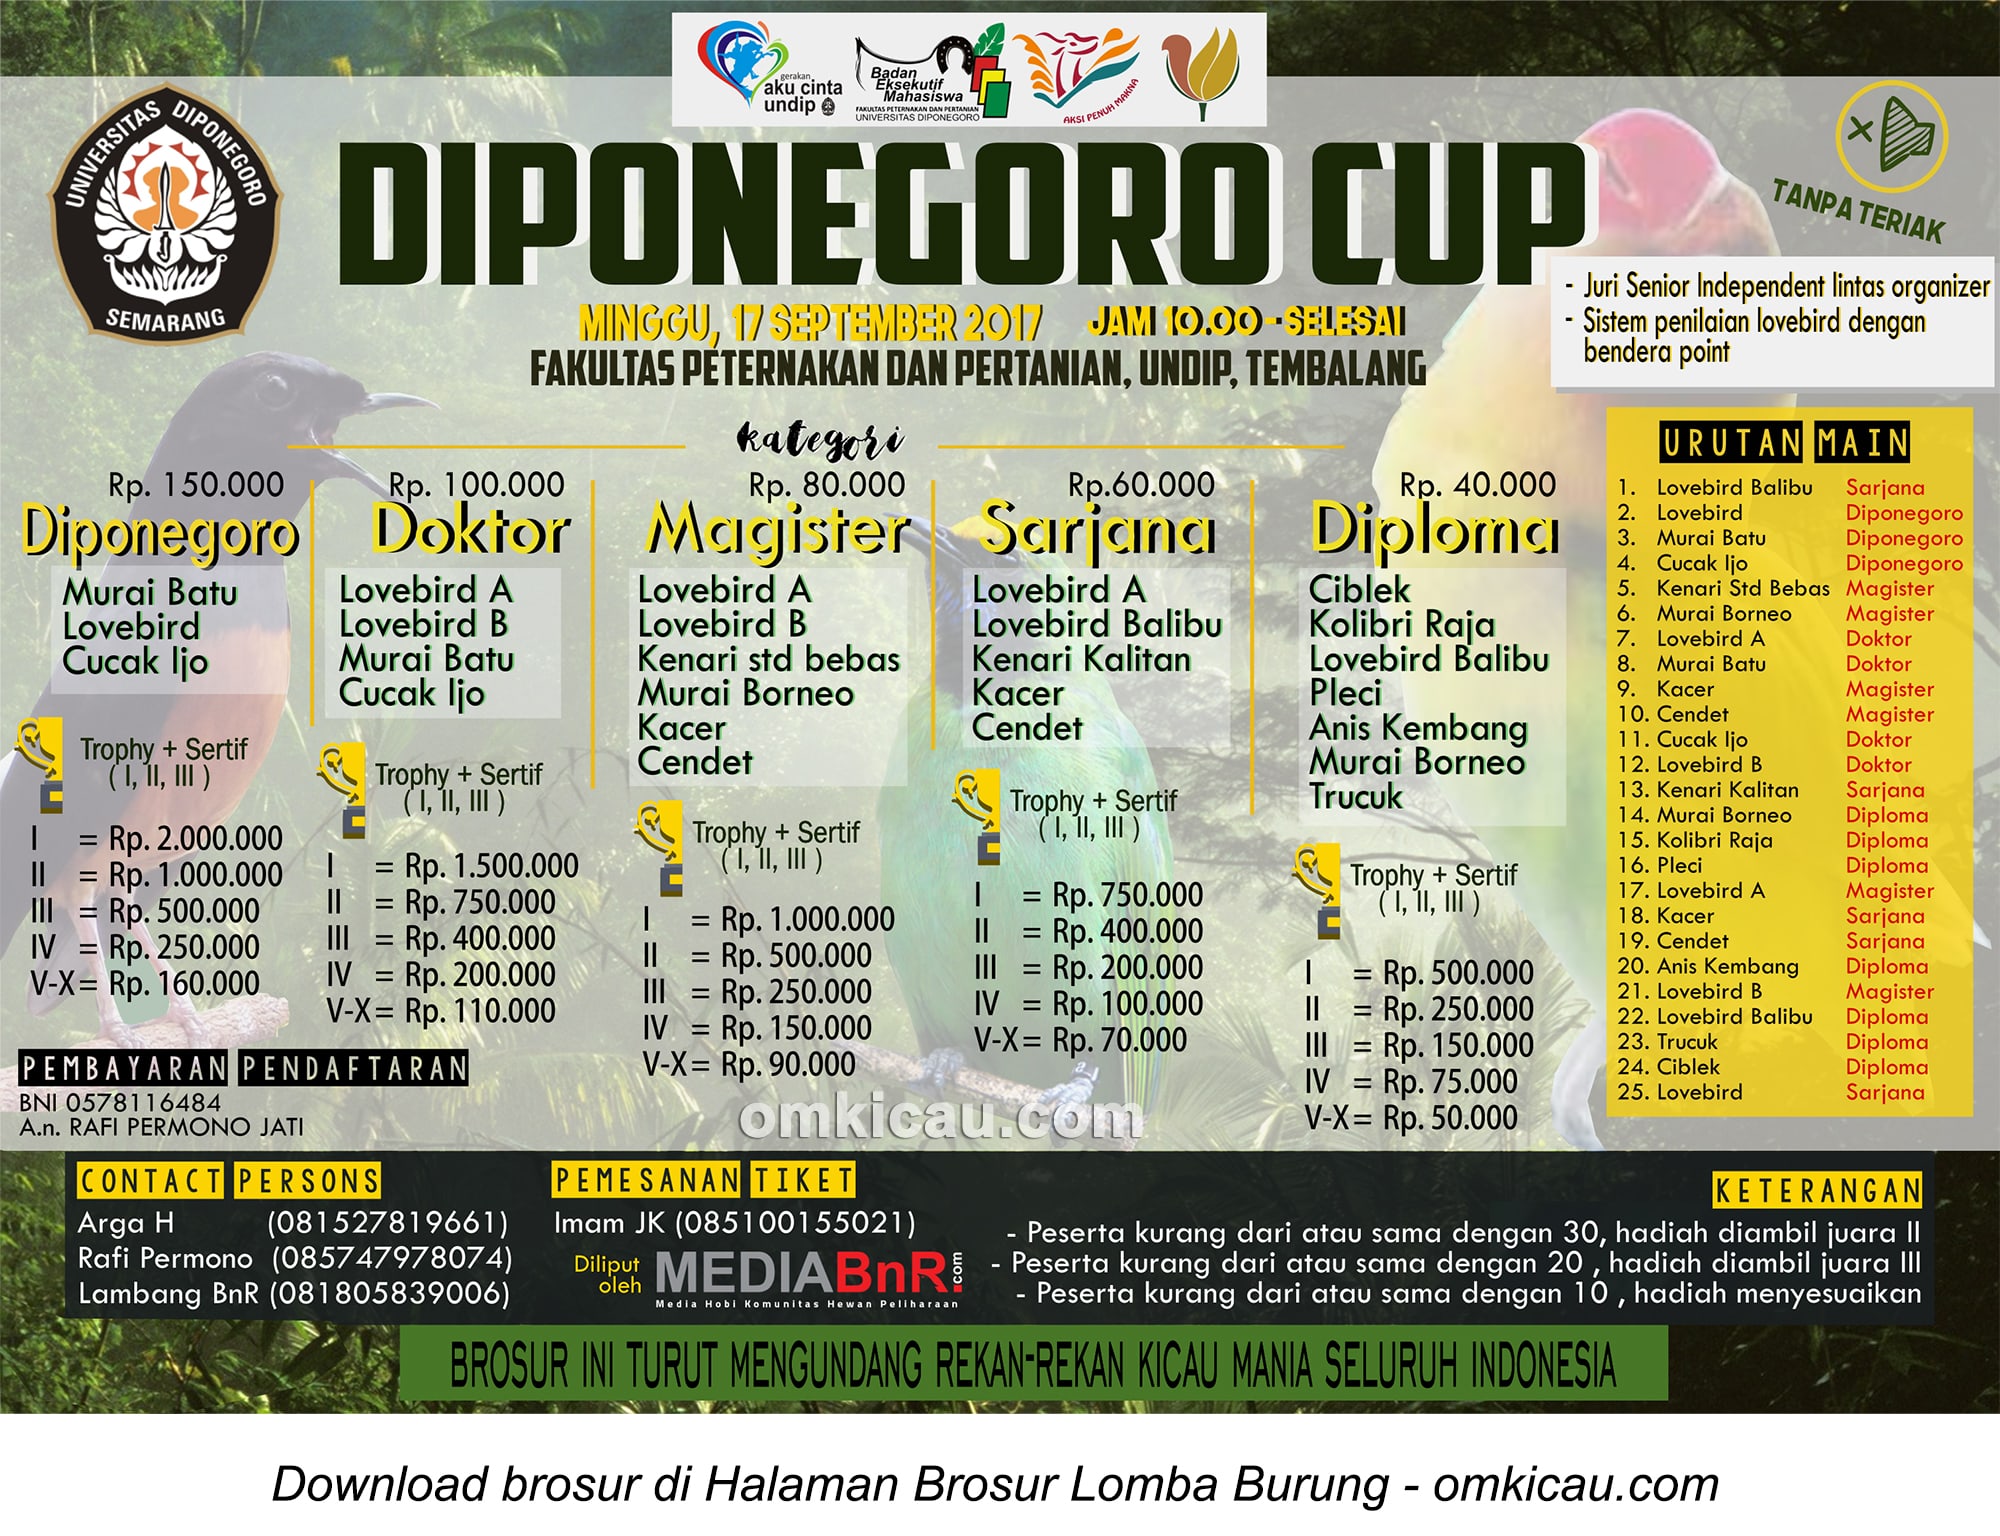  Lomba  burung Diponegoro Cup di kampus Undip Tembalang 17 